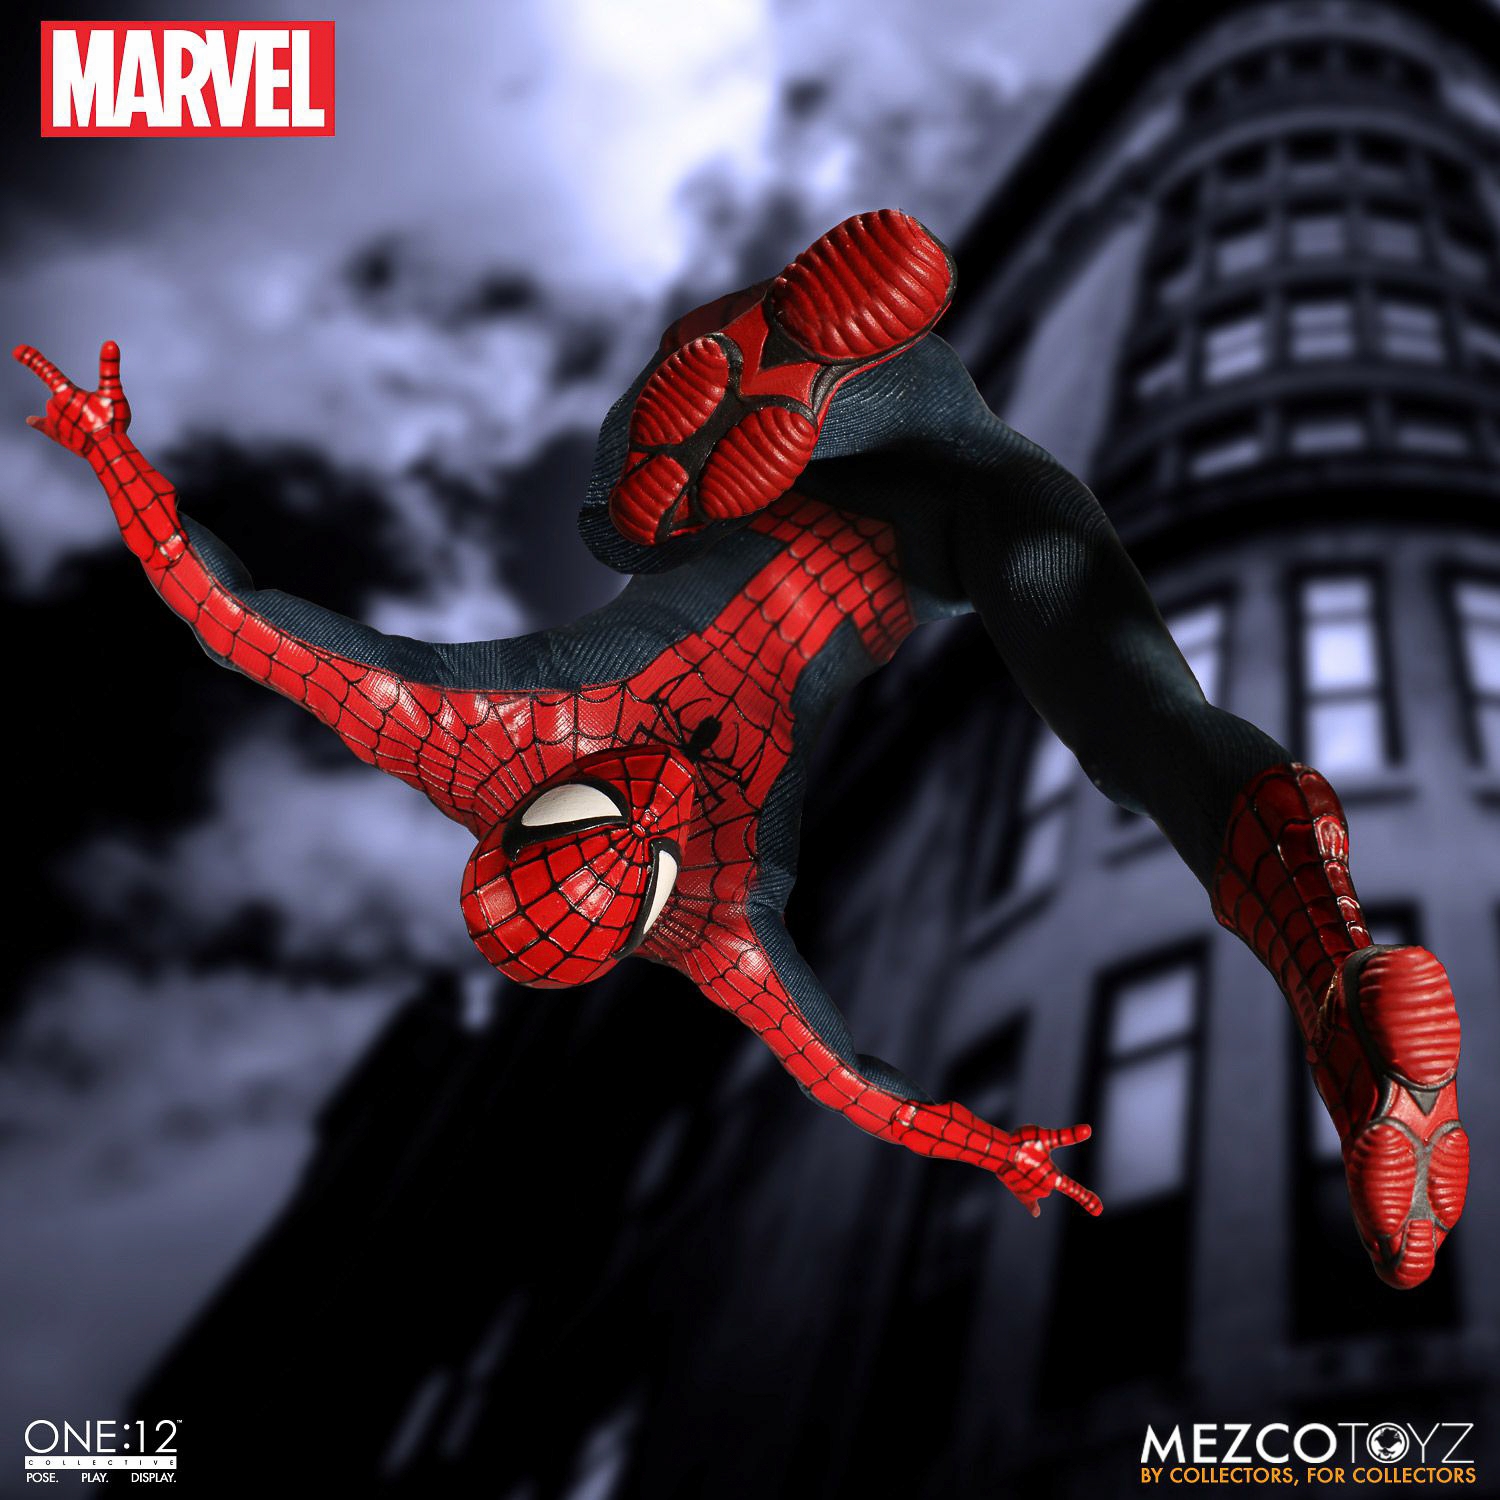 Spider-Man-One-12-Collective-Mezco-Toyz-004.jpg